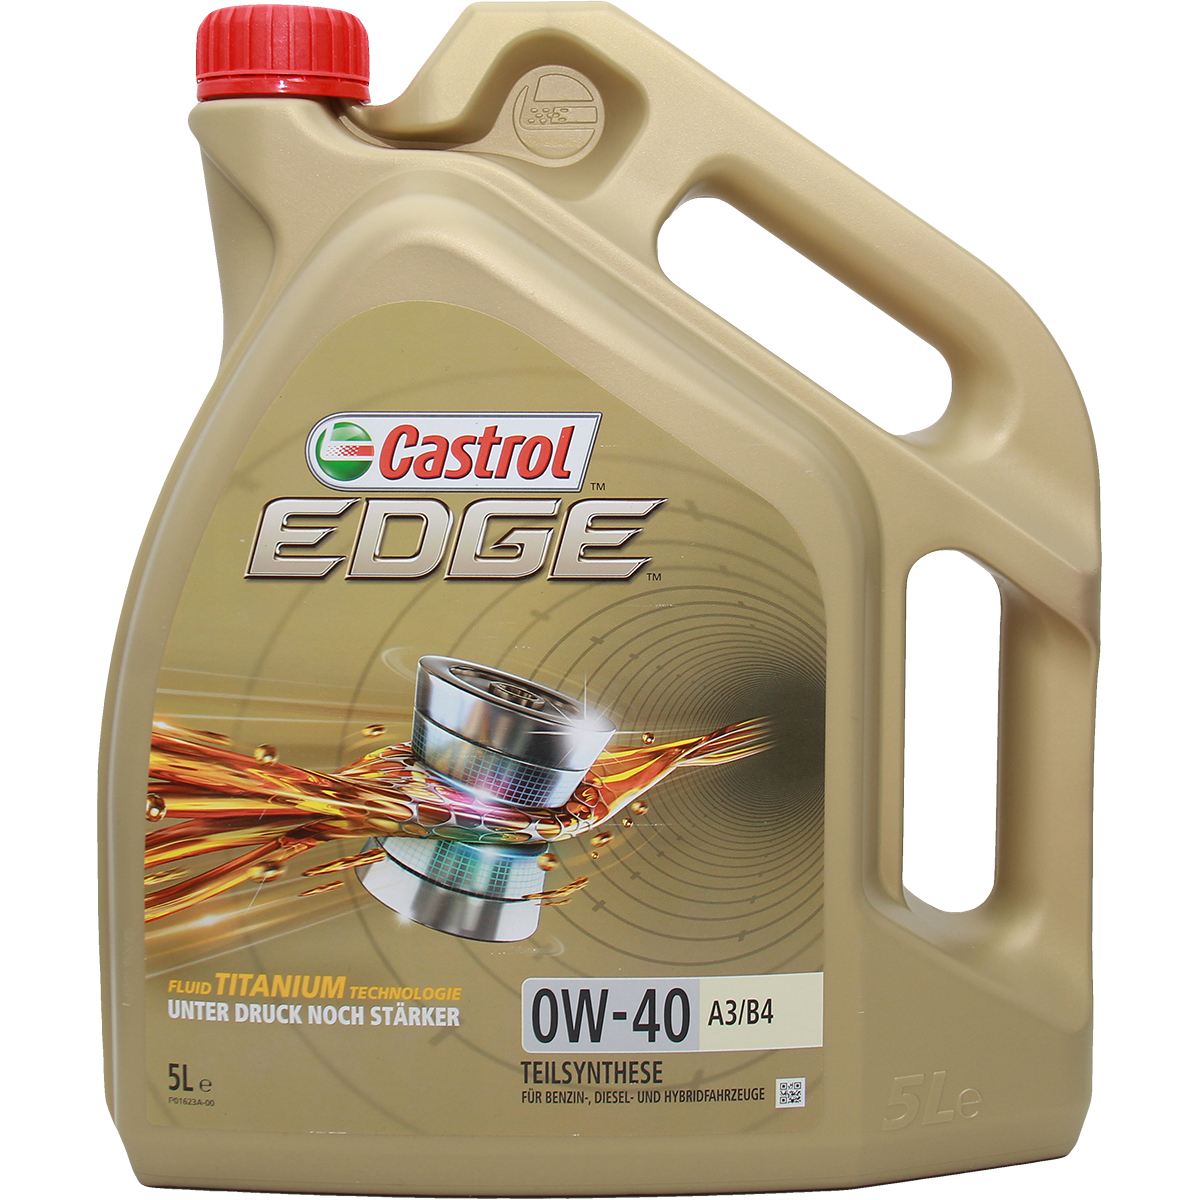 Castrol Edge Fluid Titanium 0W-40 A3/B4 5+2 Liter